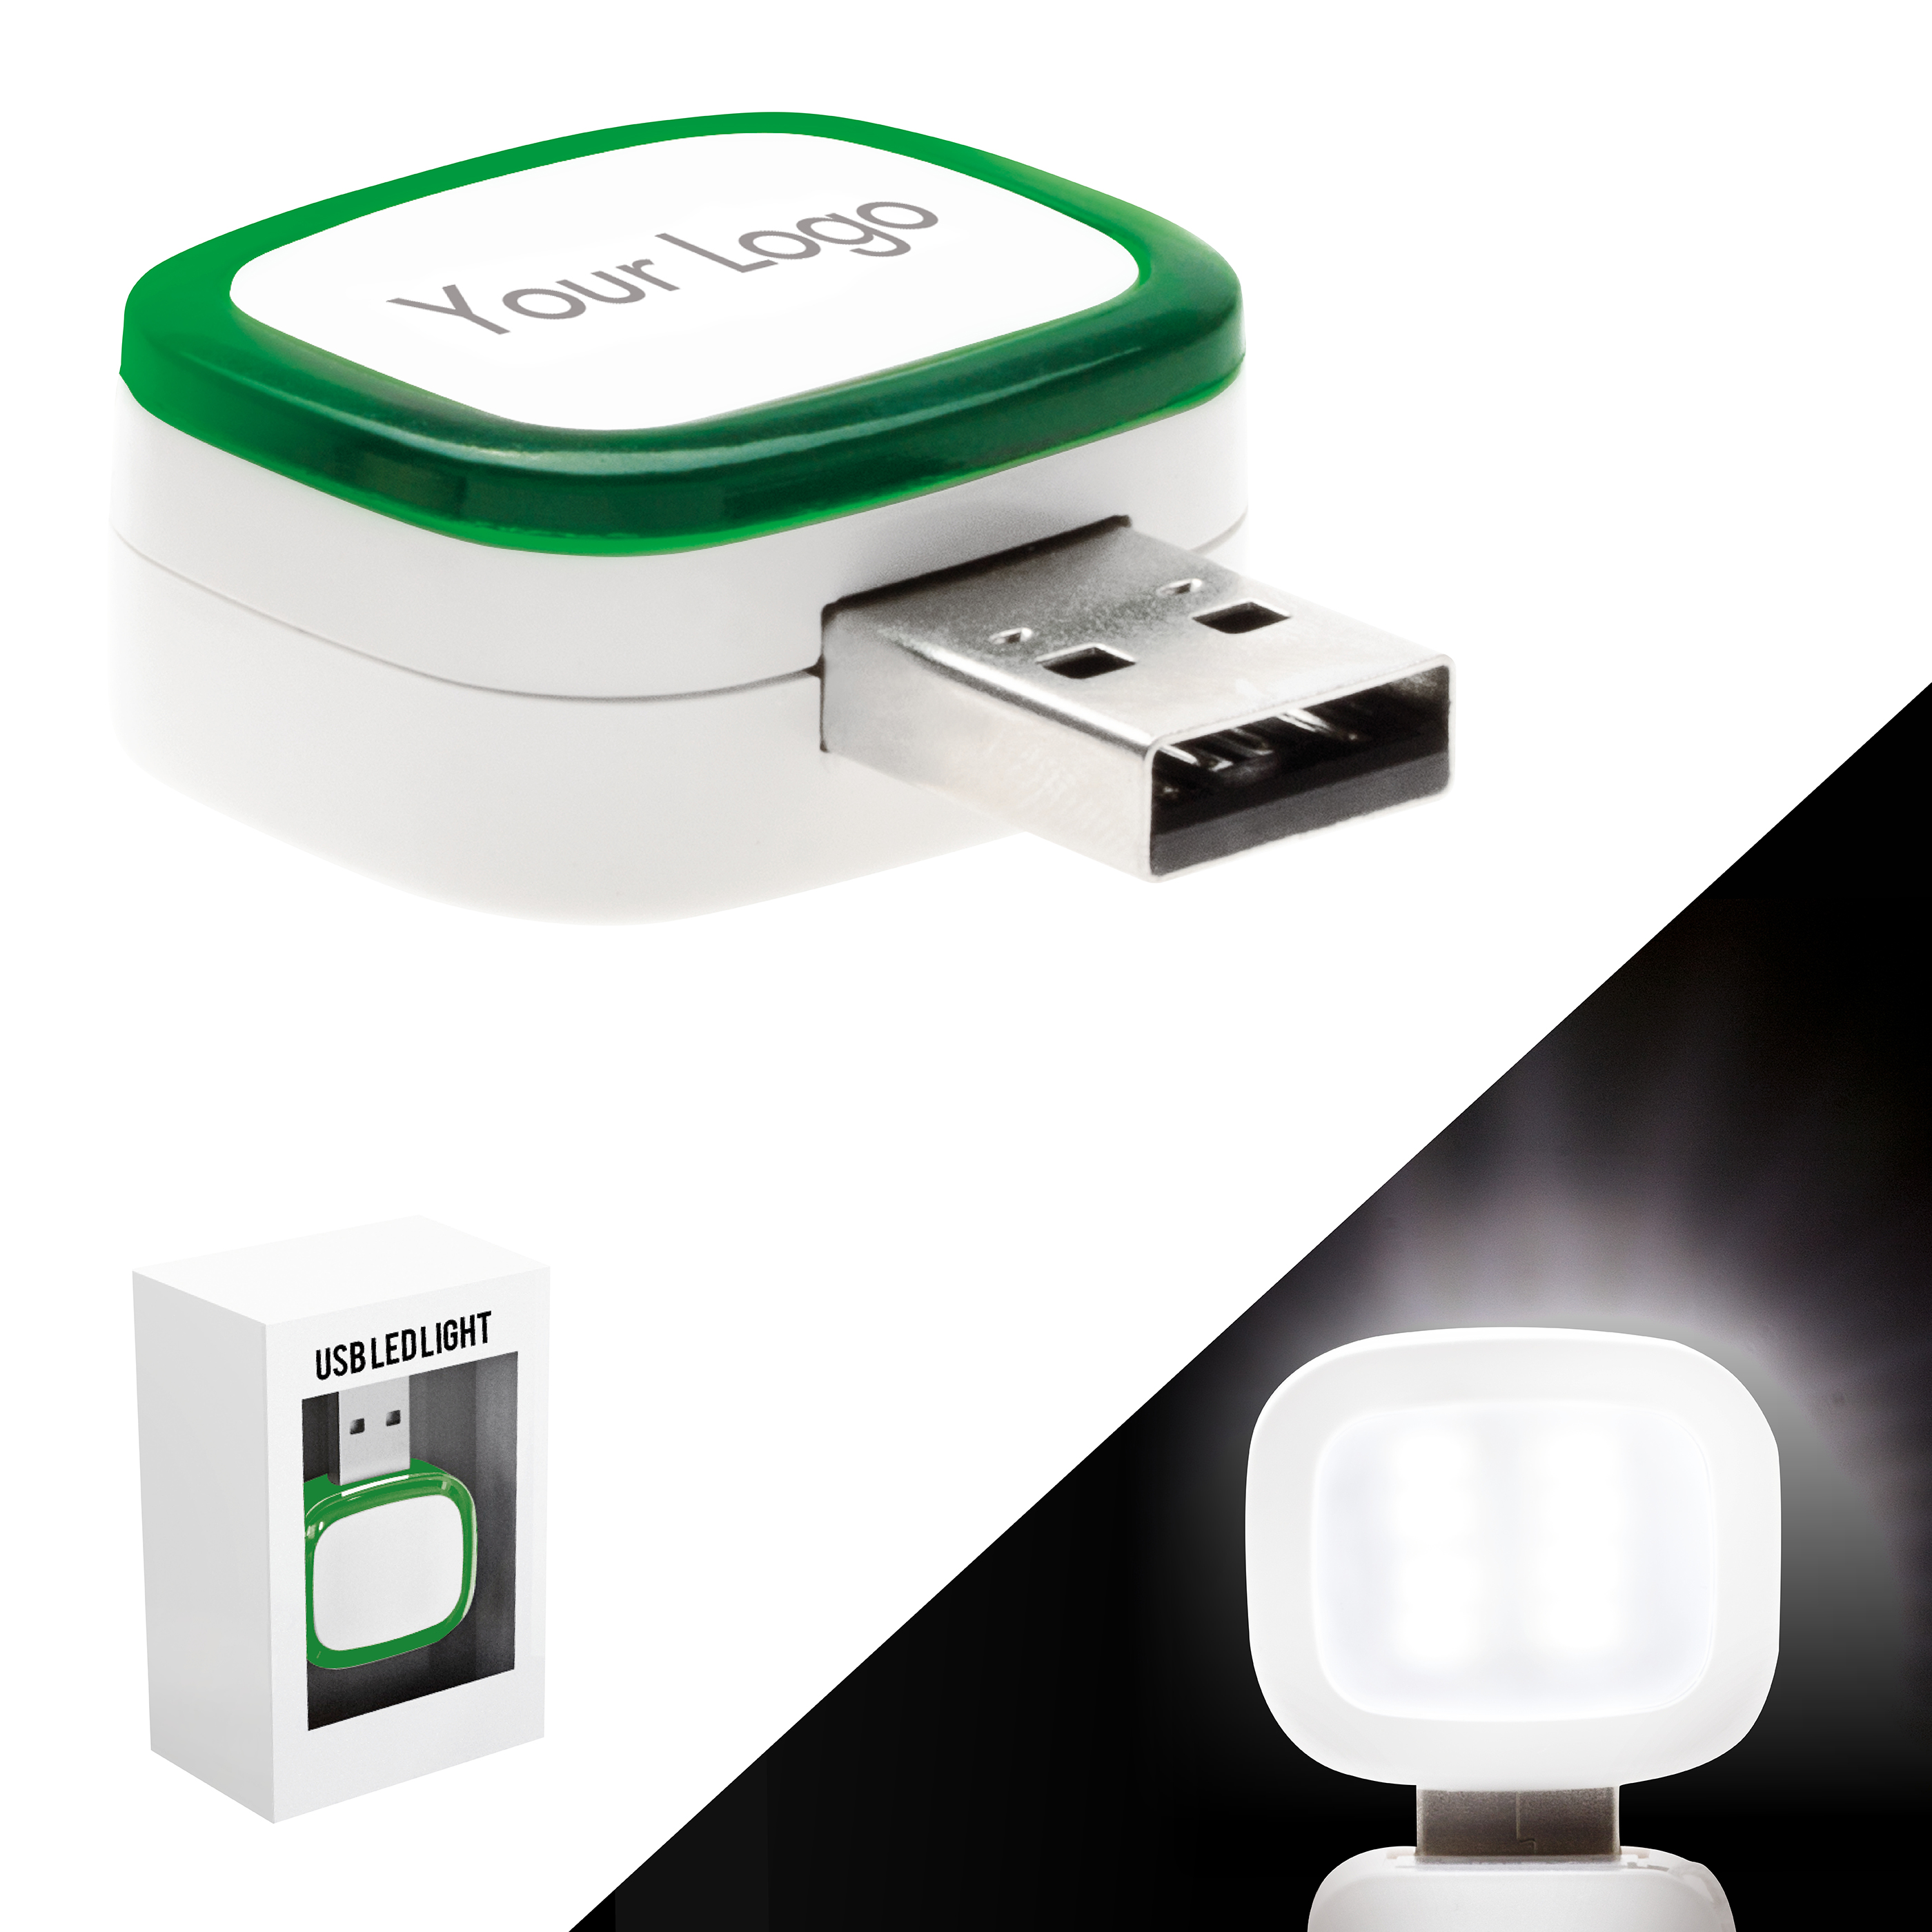 USB LED light green